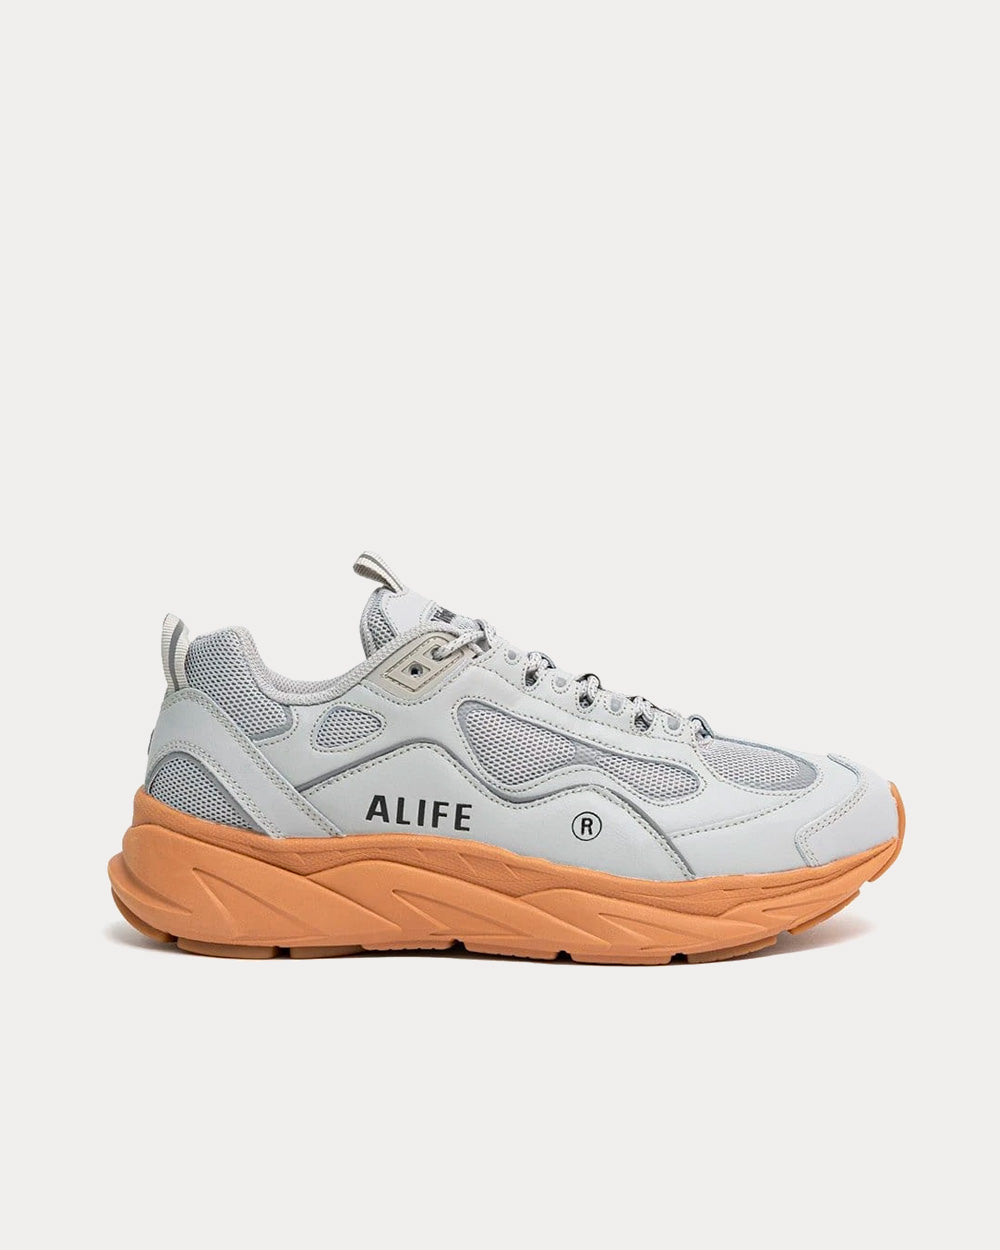 FILA x Alife in - Peace Grey Low Sneak Trigate Sneakers Top